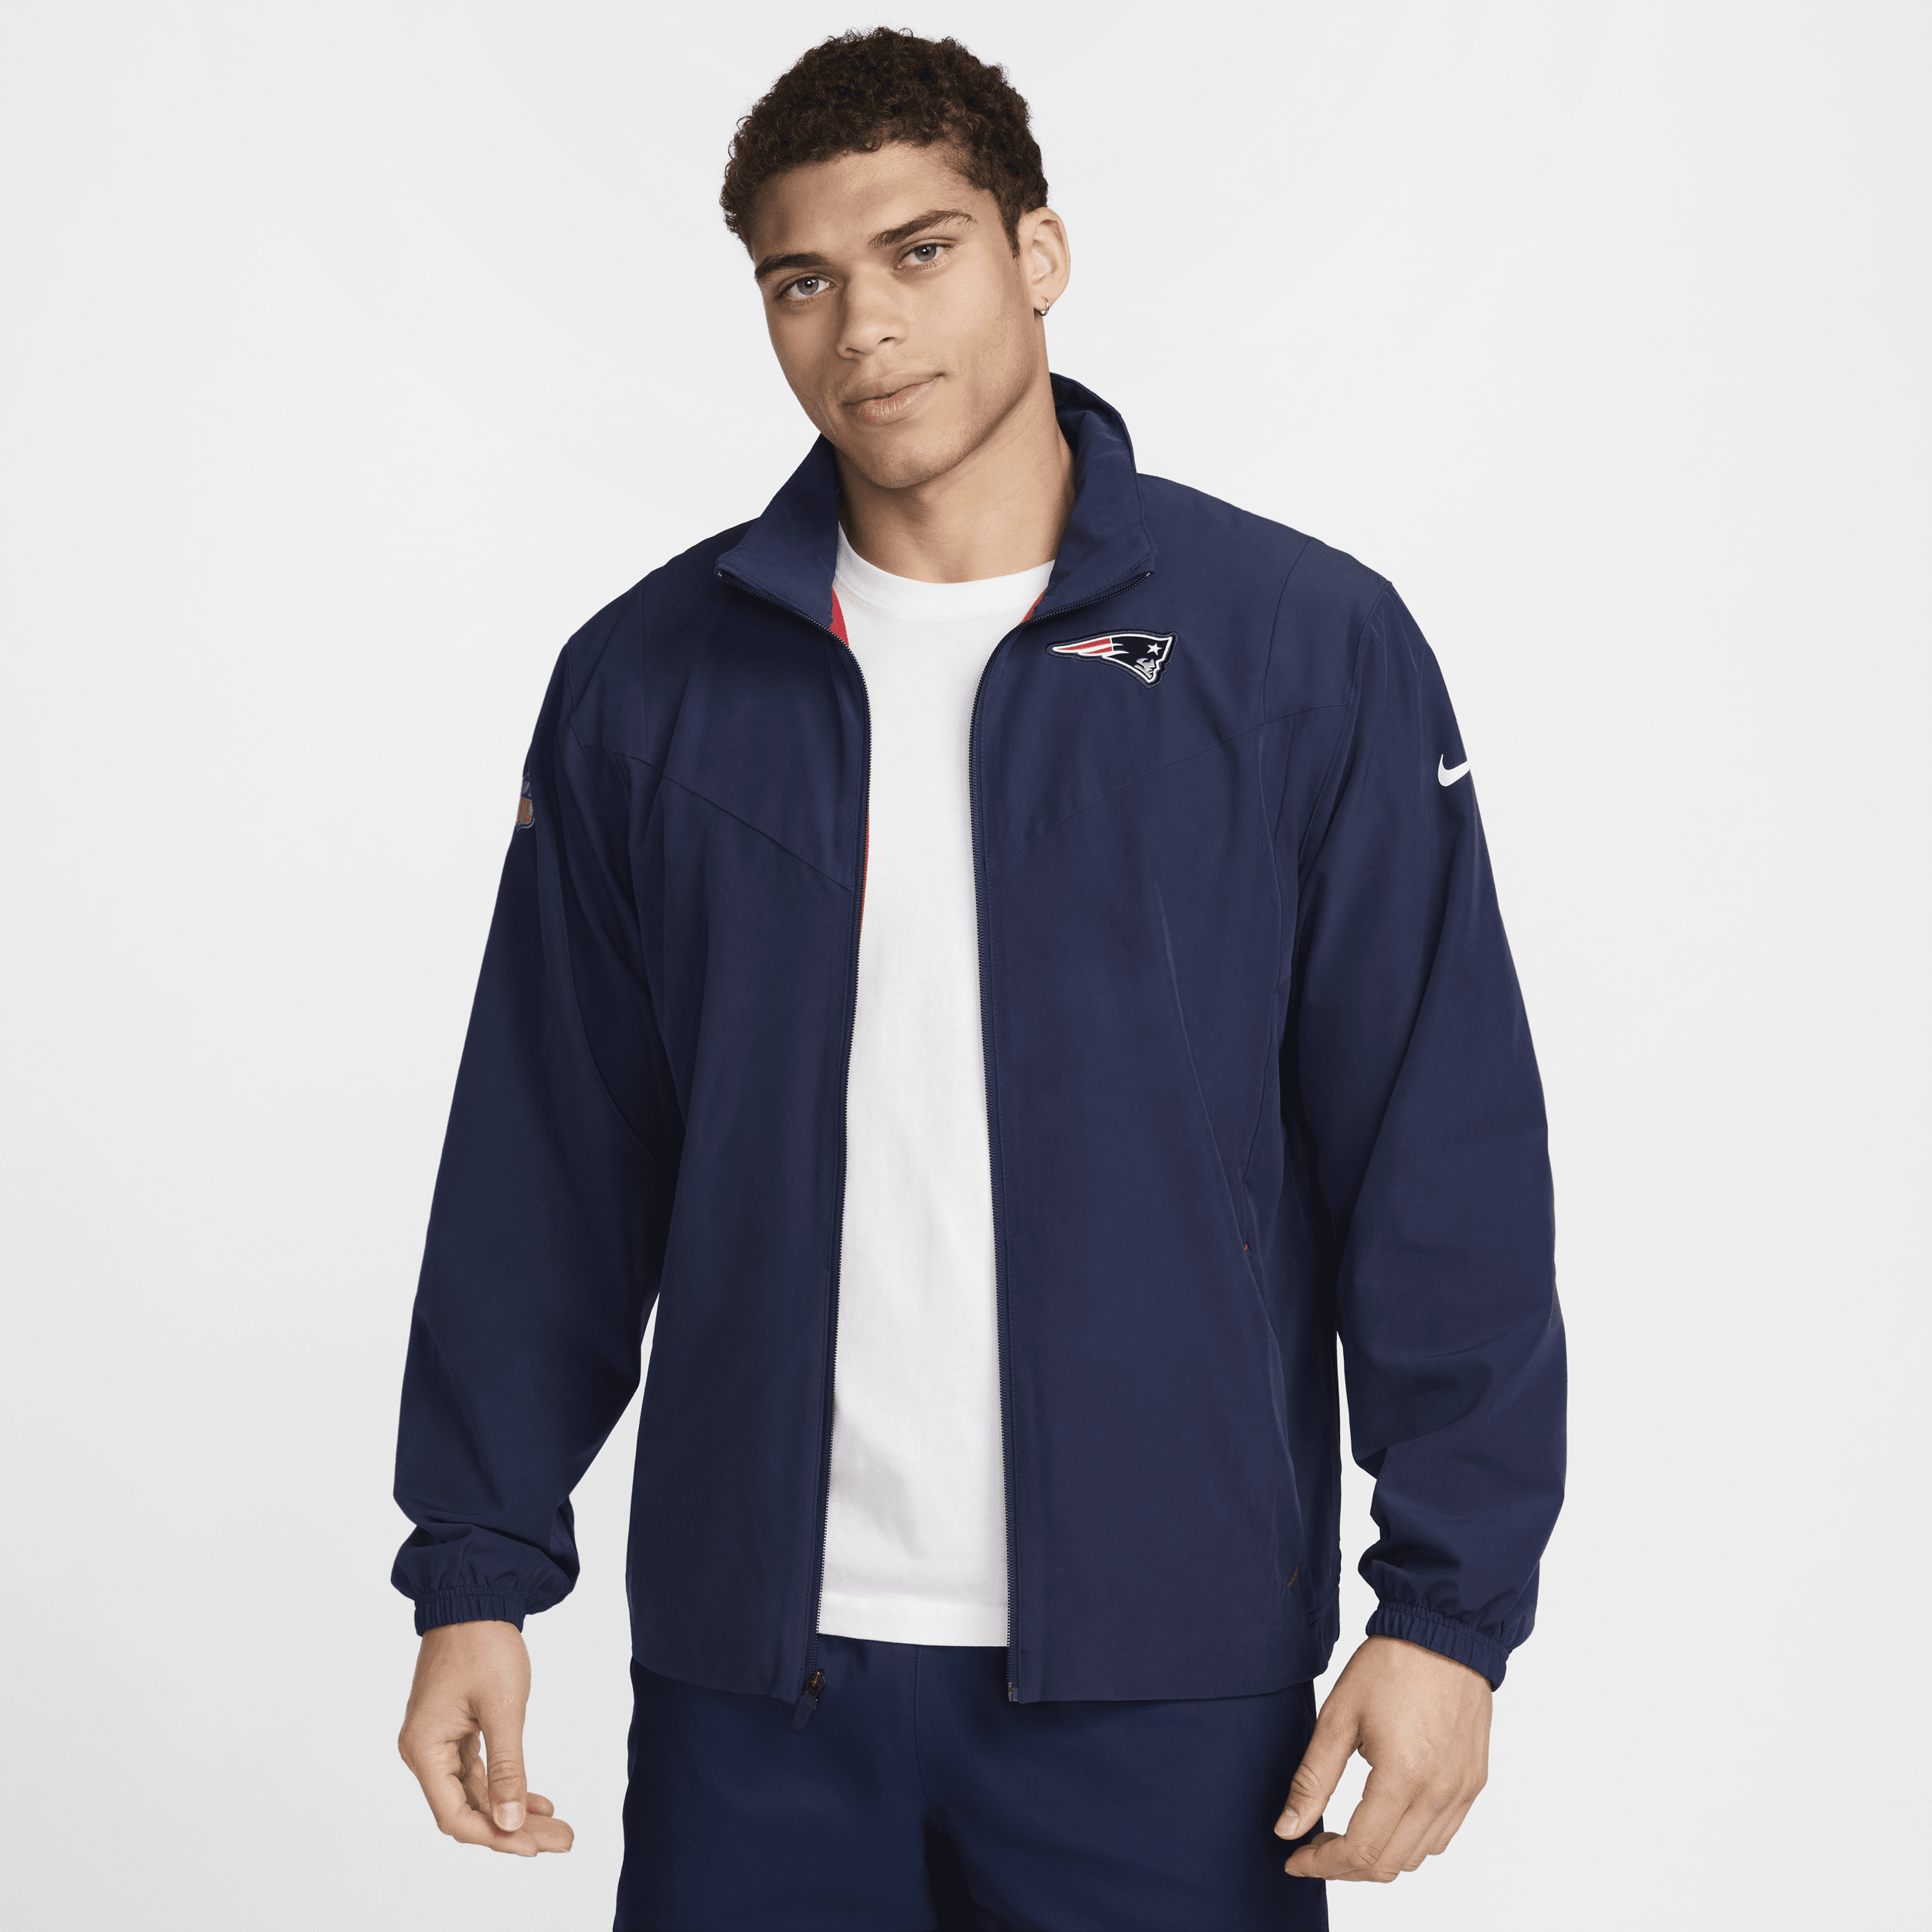 Giacca con zip a tutta lunghezza Nike Sideline Repel (NFL New England Patriots) – Uomo - Blu